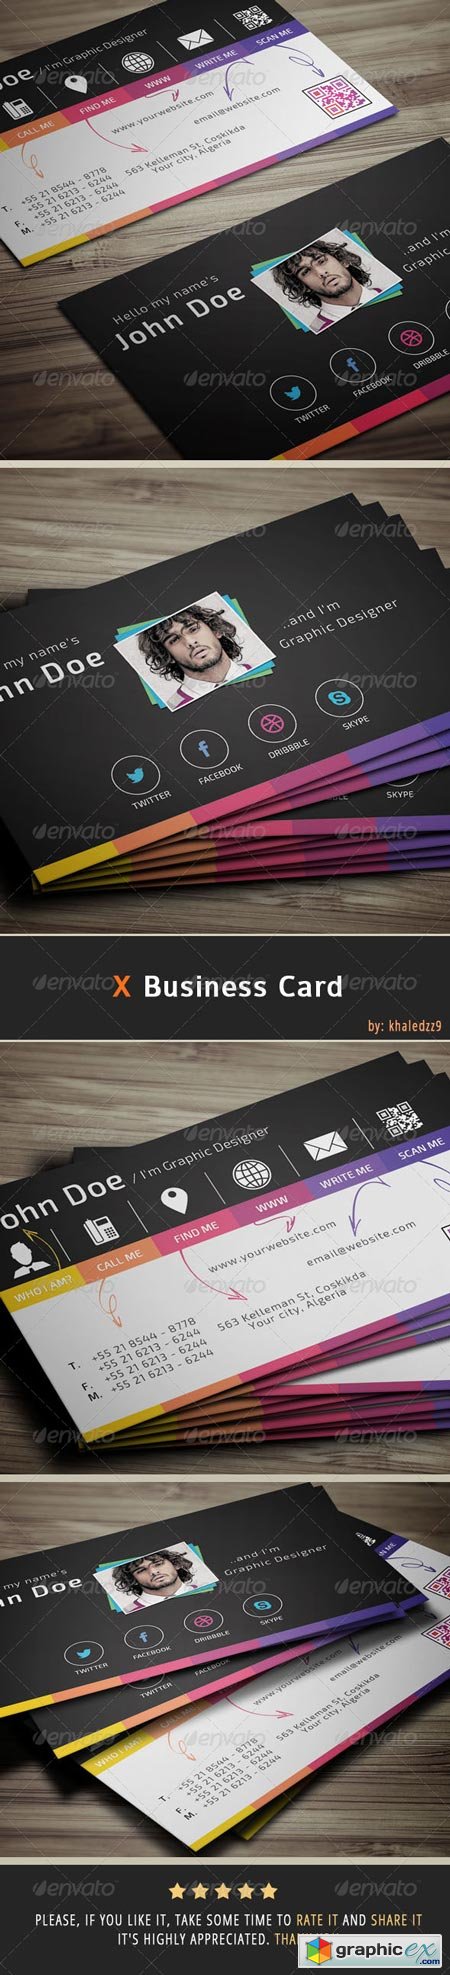 X Business Card 6848741